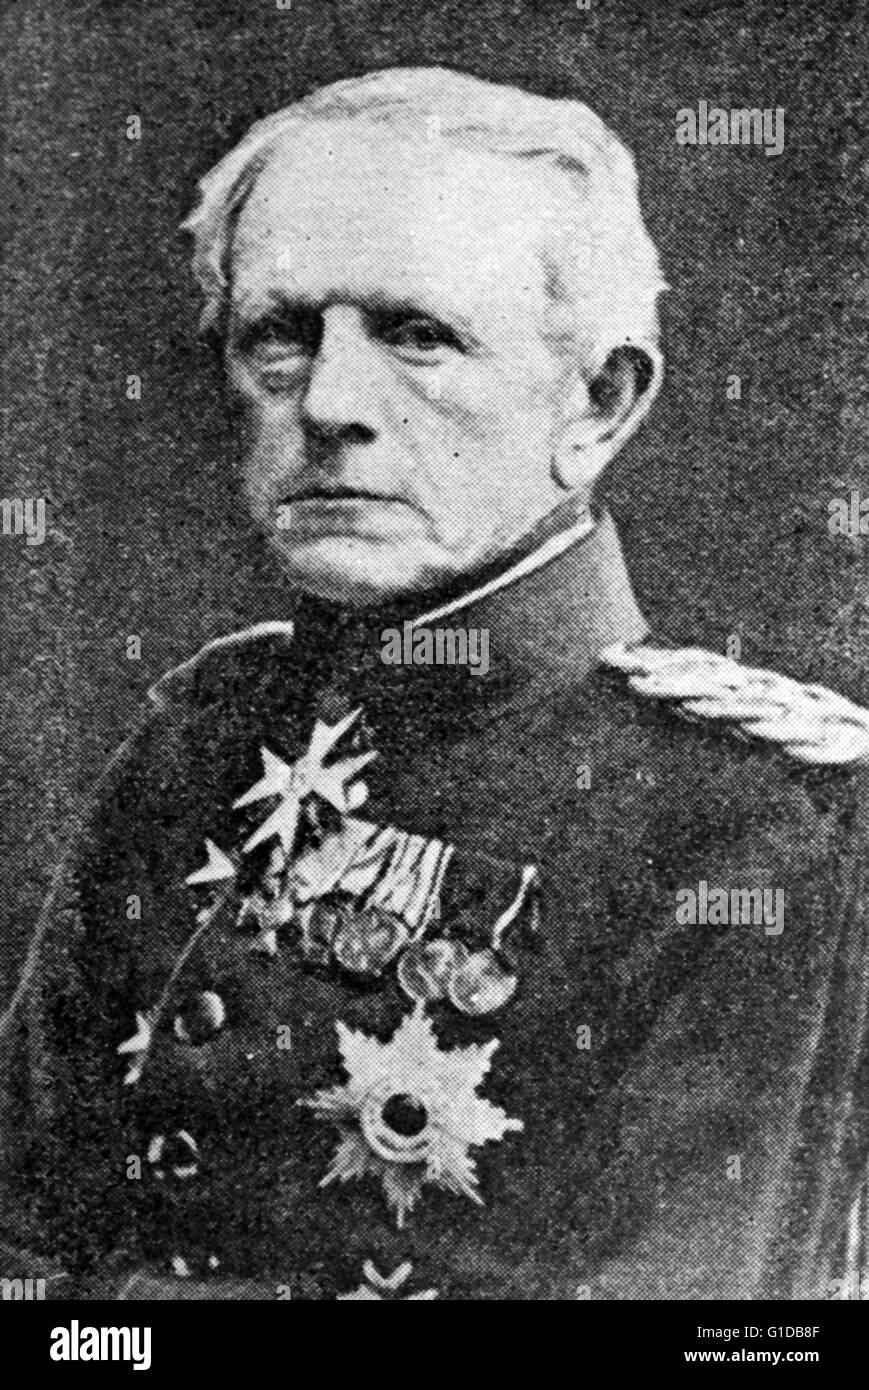 Photographic portrait of Helmuth von Moltke the Elder (1800-1891) a German Field Marshal. Dated 19th Century Stock Photo